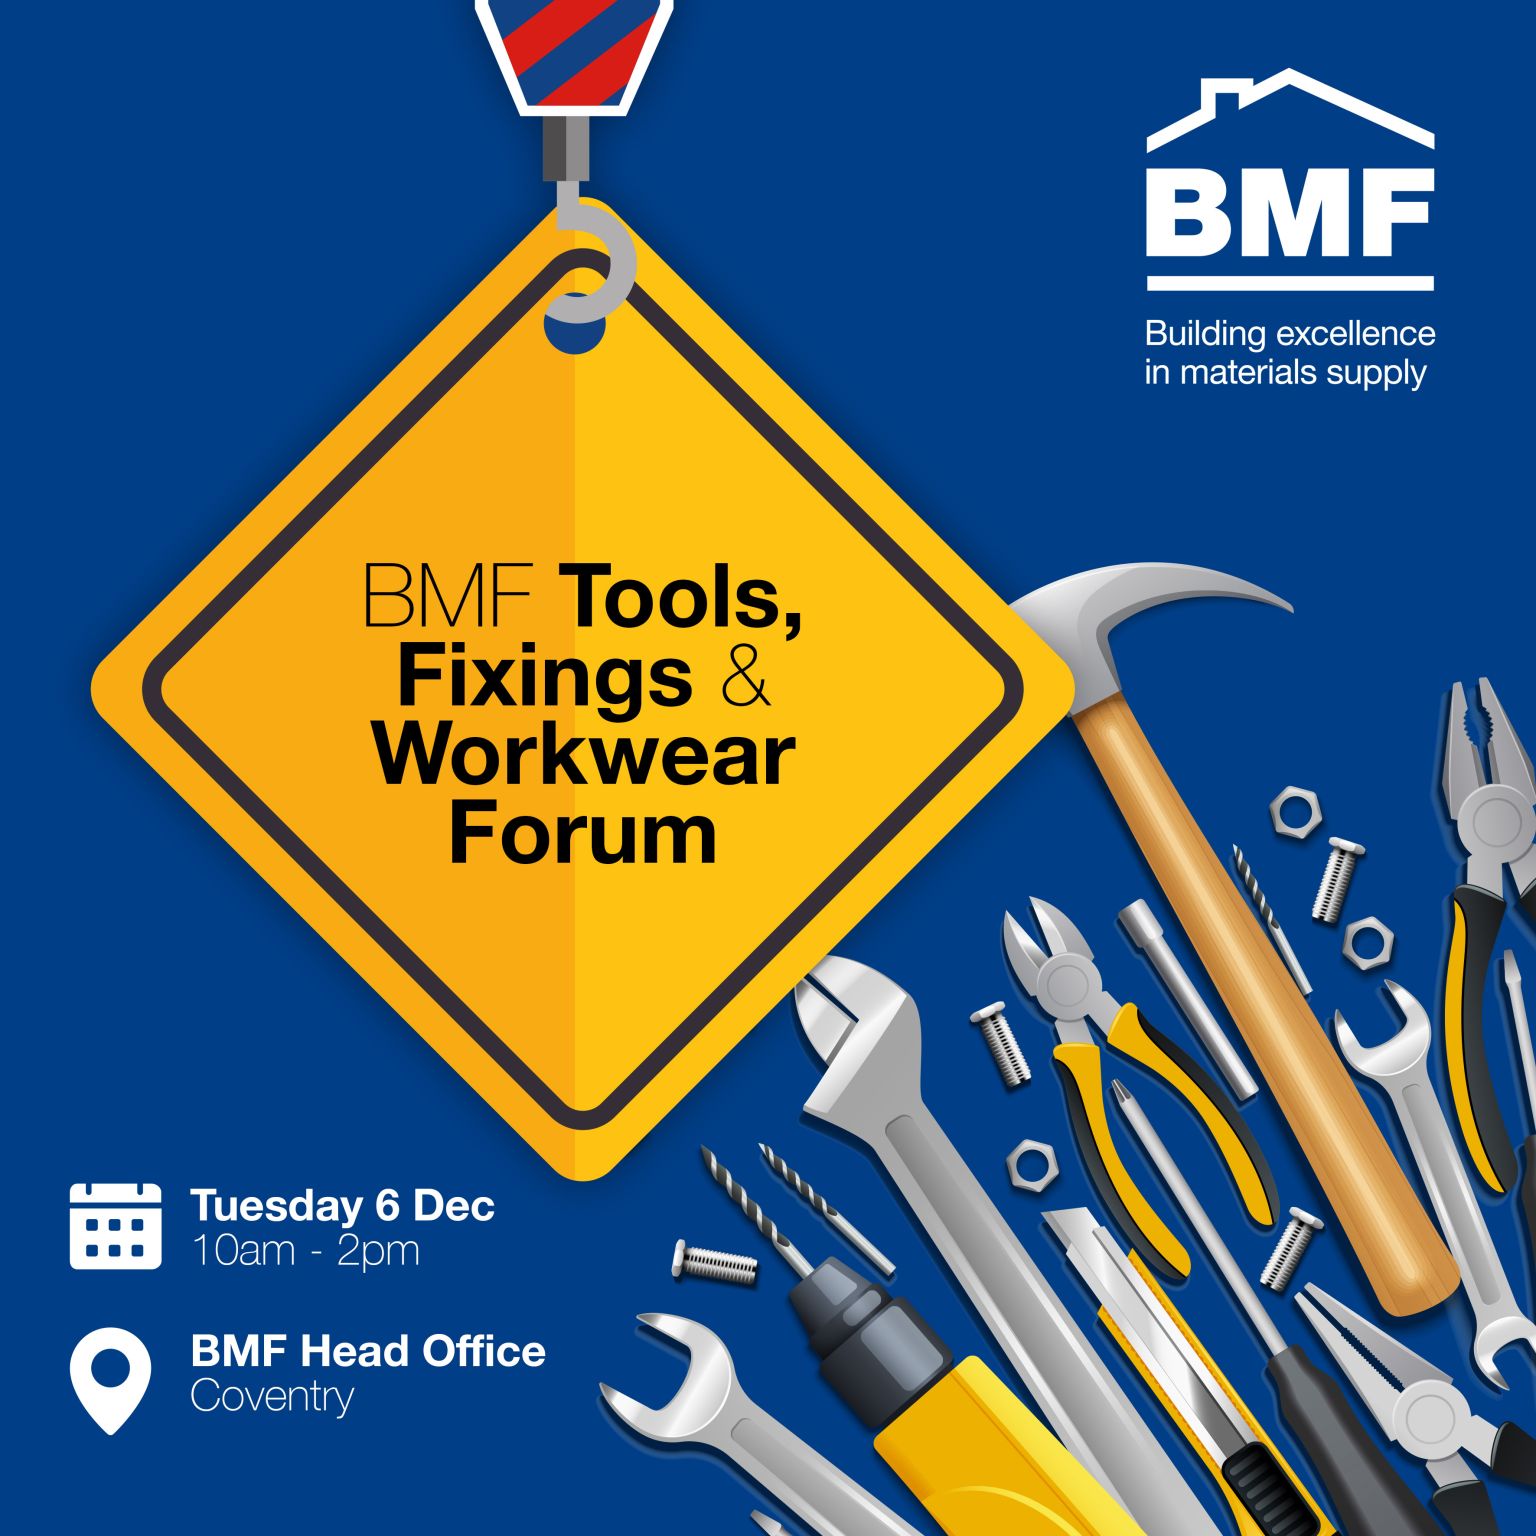 BMF Tools, Fixings & Workwear Forum